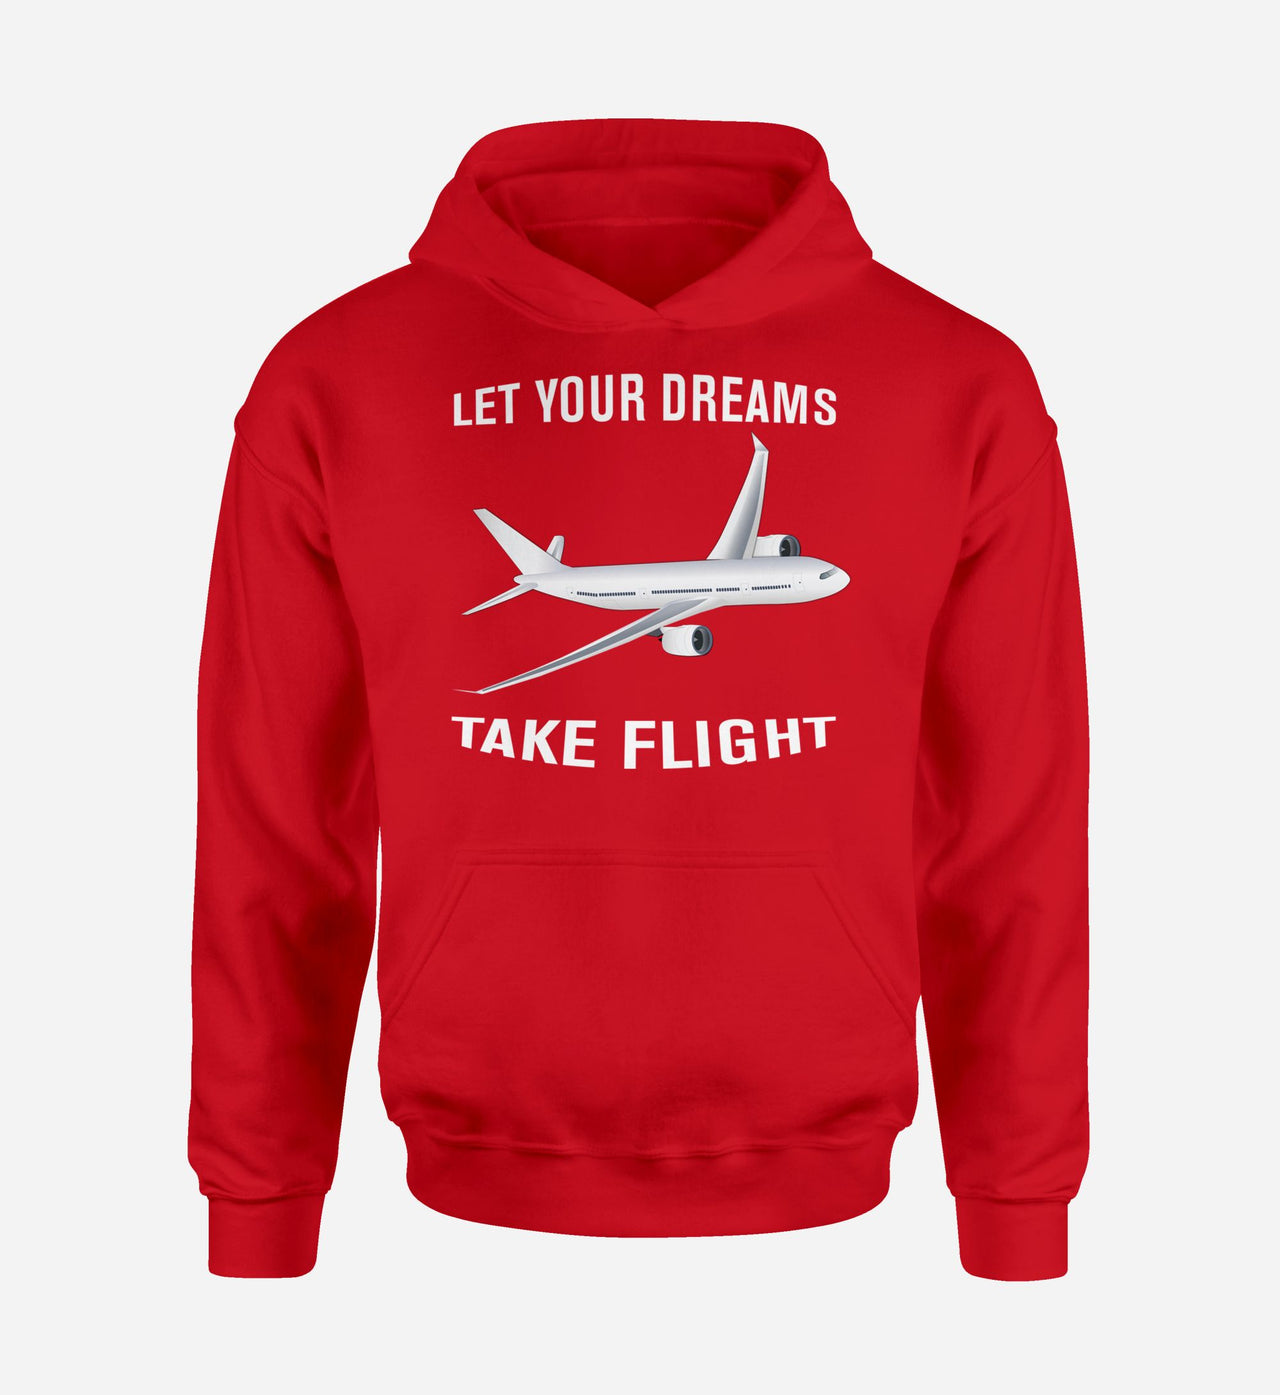 Let Your Dreams Take Flight Designed Hoodies